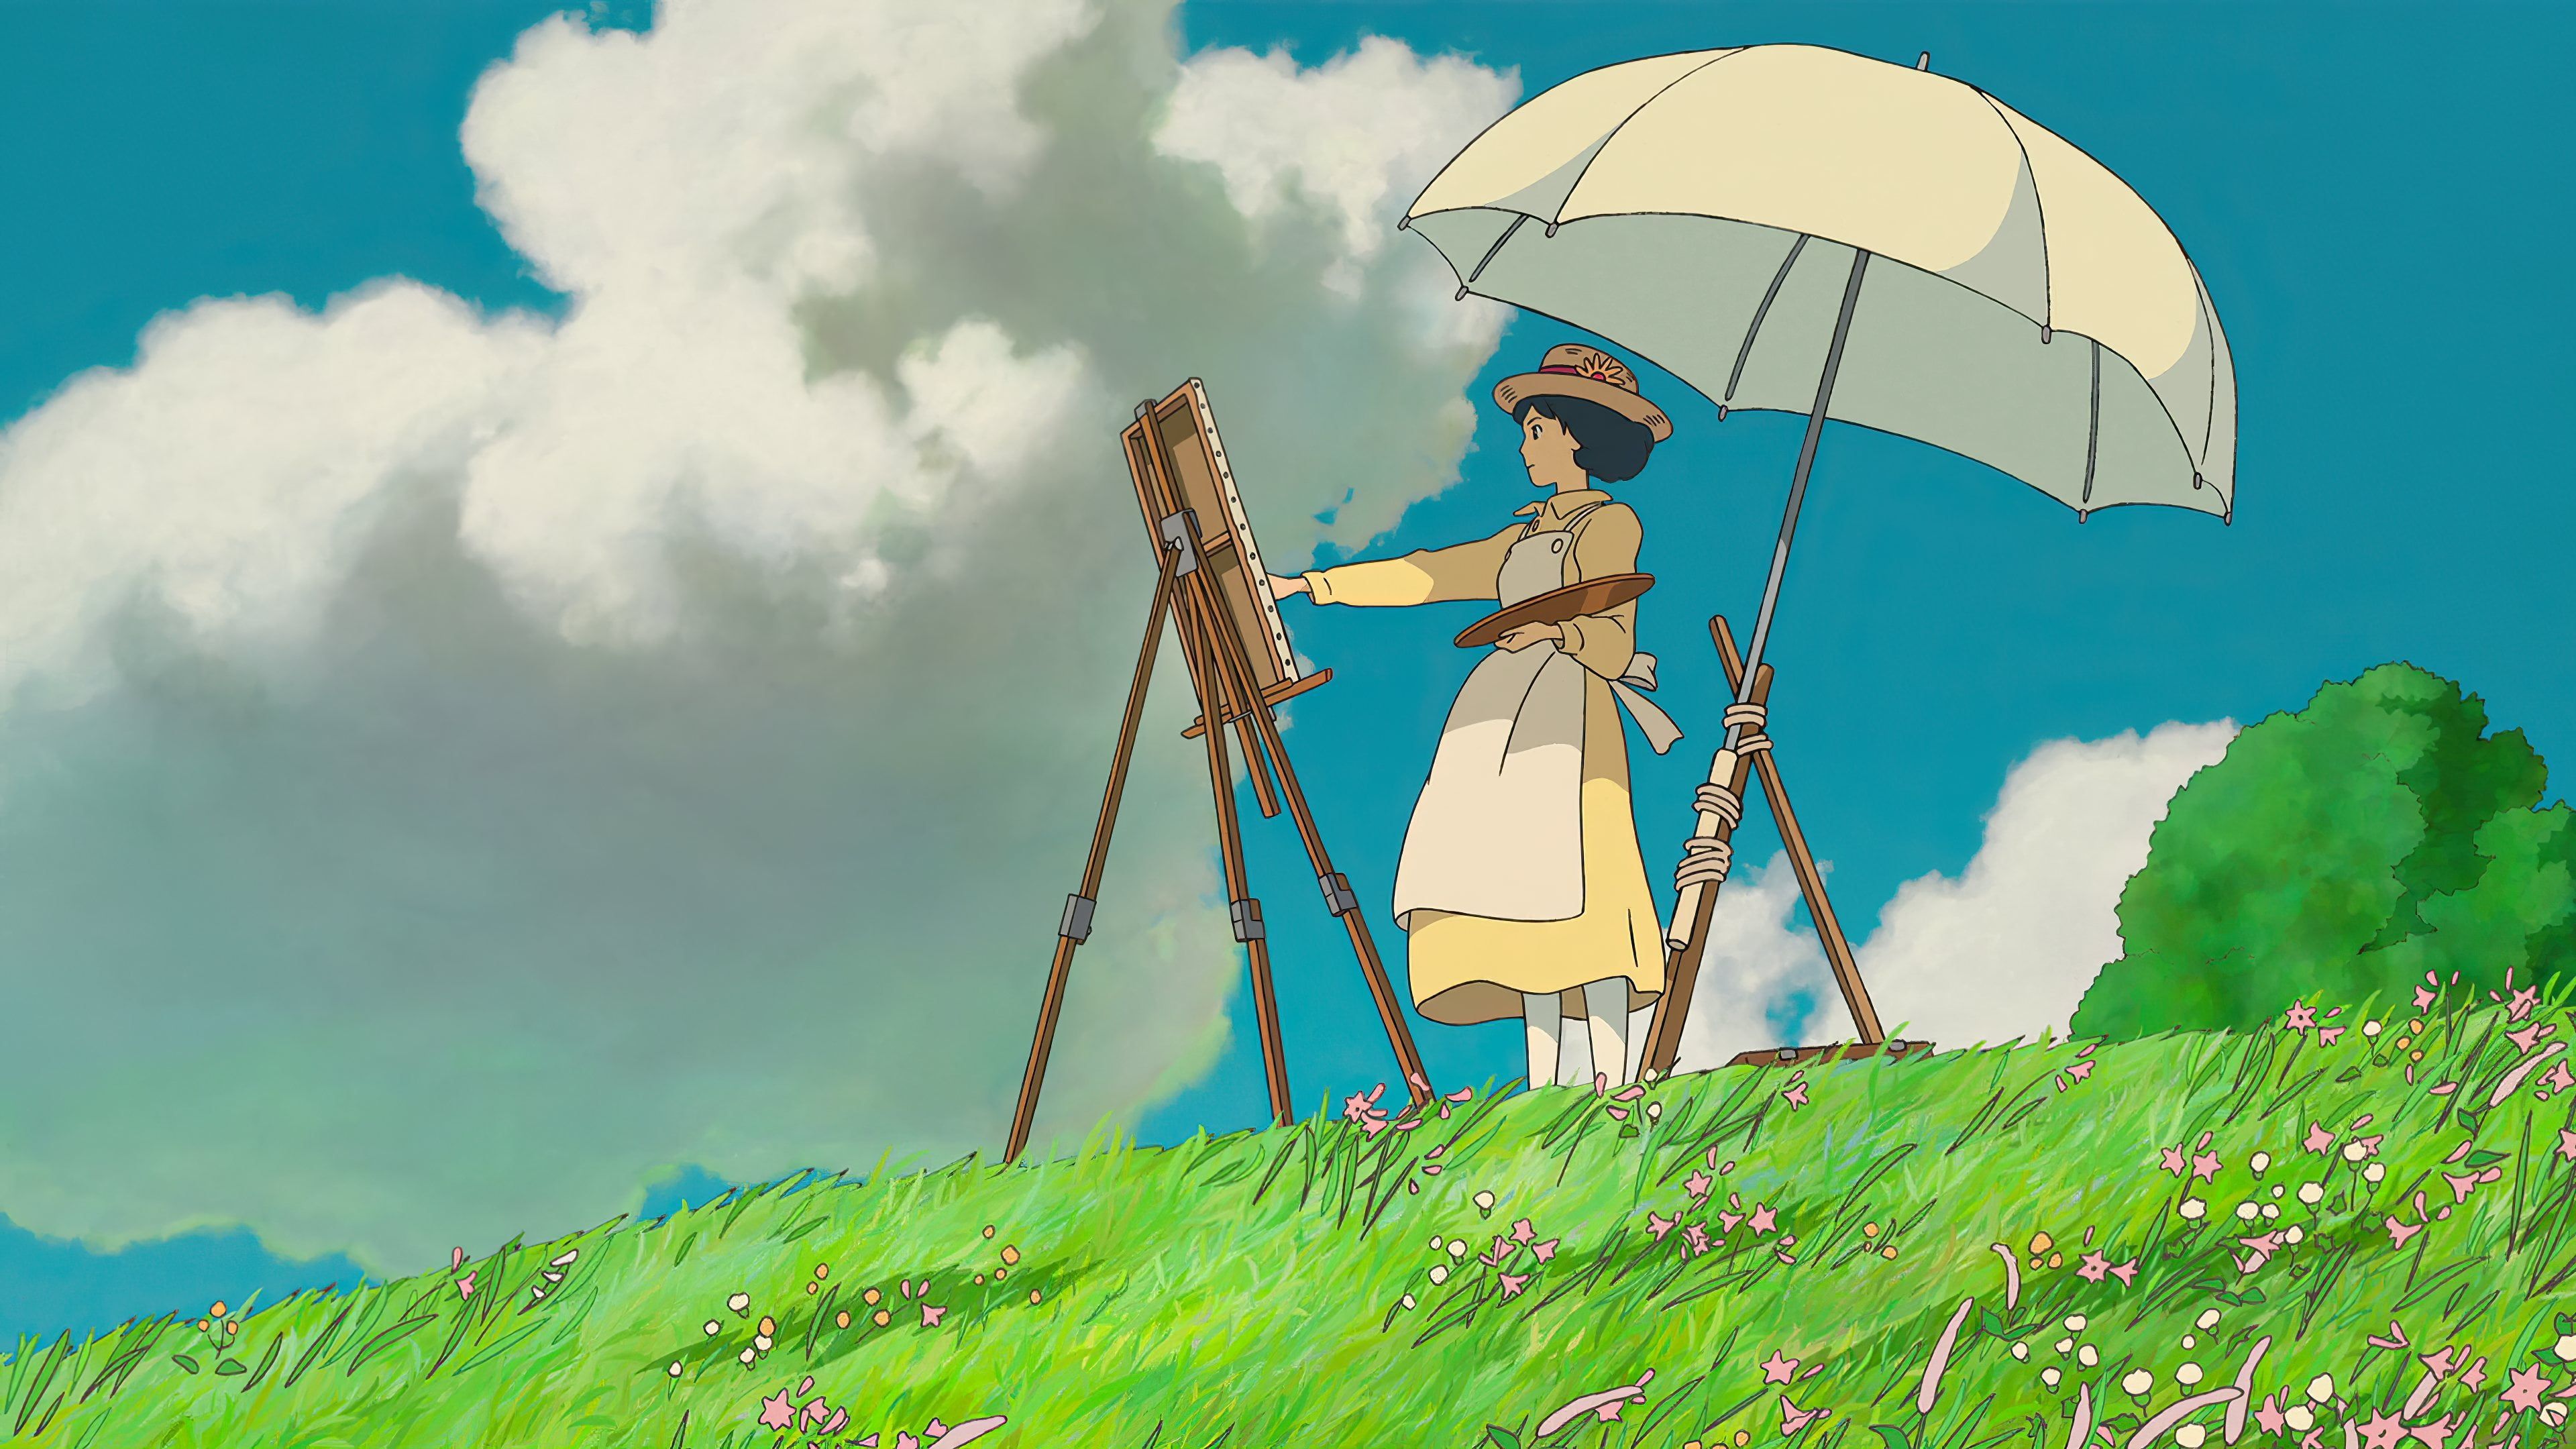 Studio Ghibli #nature #landscape The Wind Rises #colorful #anime anime girls #sky K #wallpaper #hdwallpaper #d. Art studio ghibli, Miyazaki, Studio ghibli films